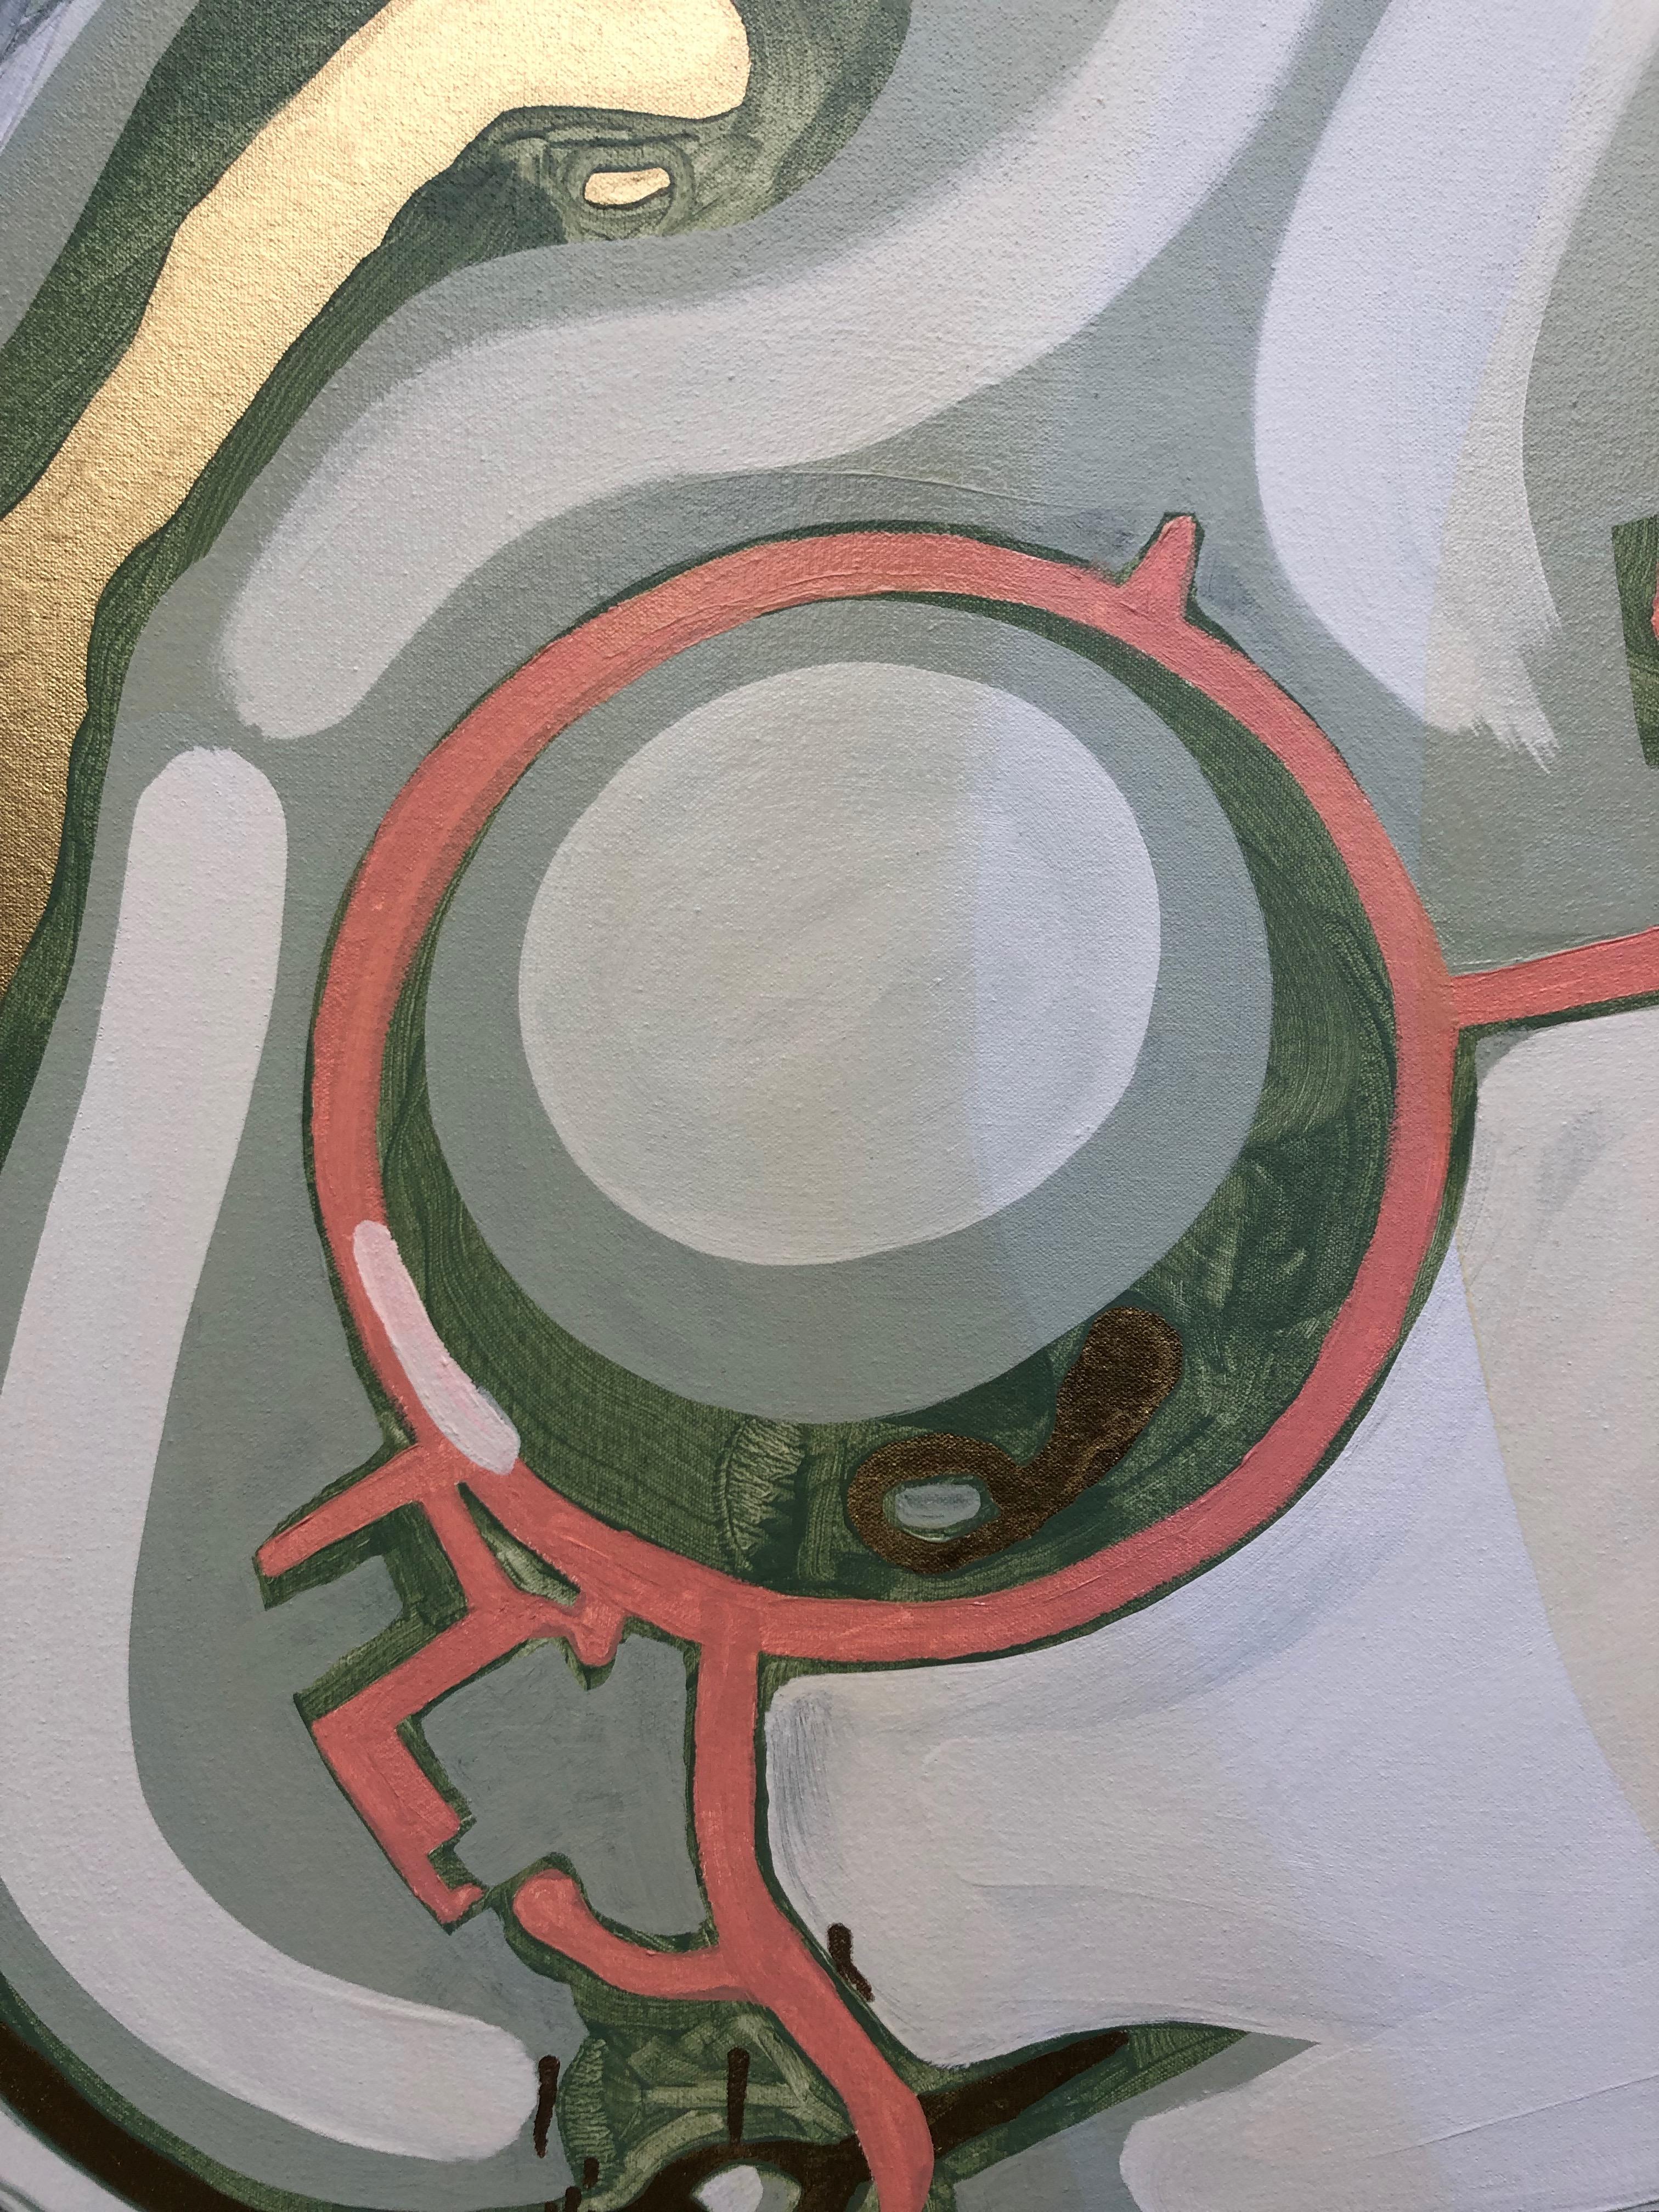 Regent's Park by Thomas J Smith, Contemporary 21st Century British Artist - Maps 7